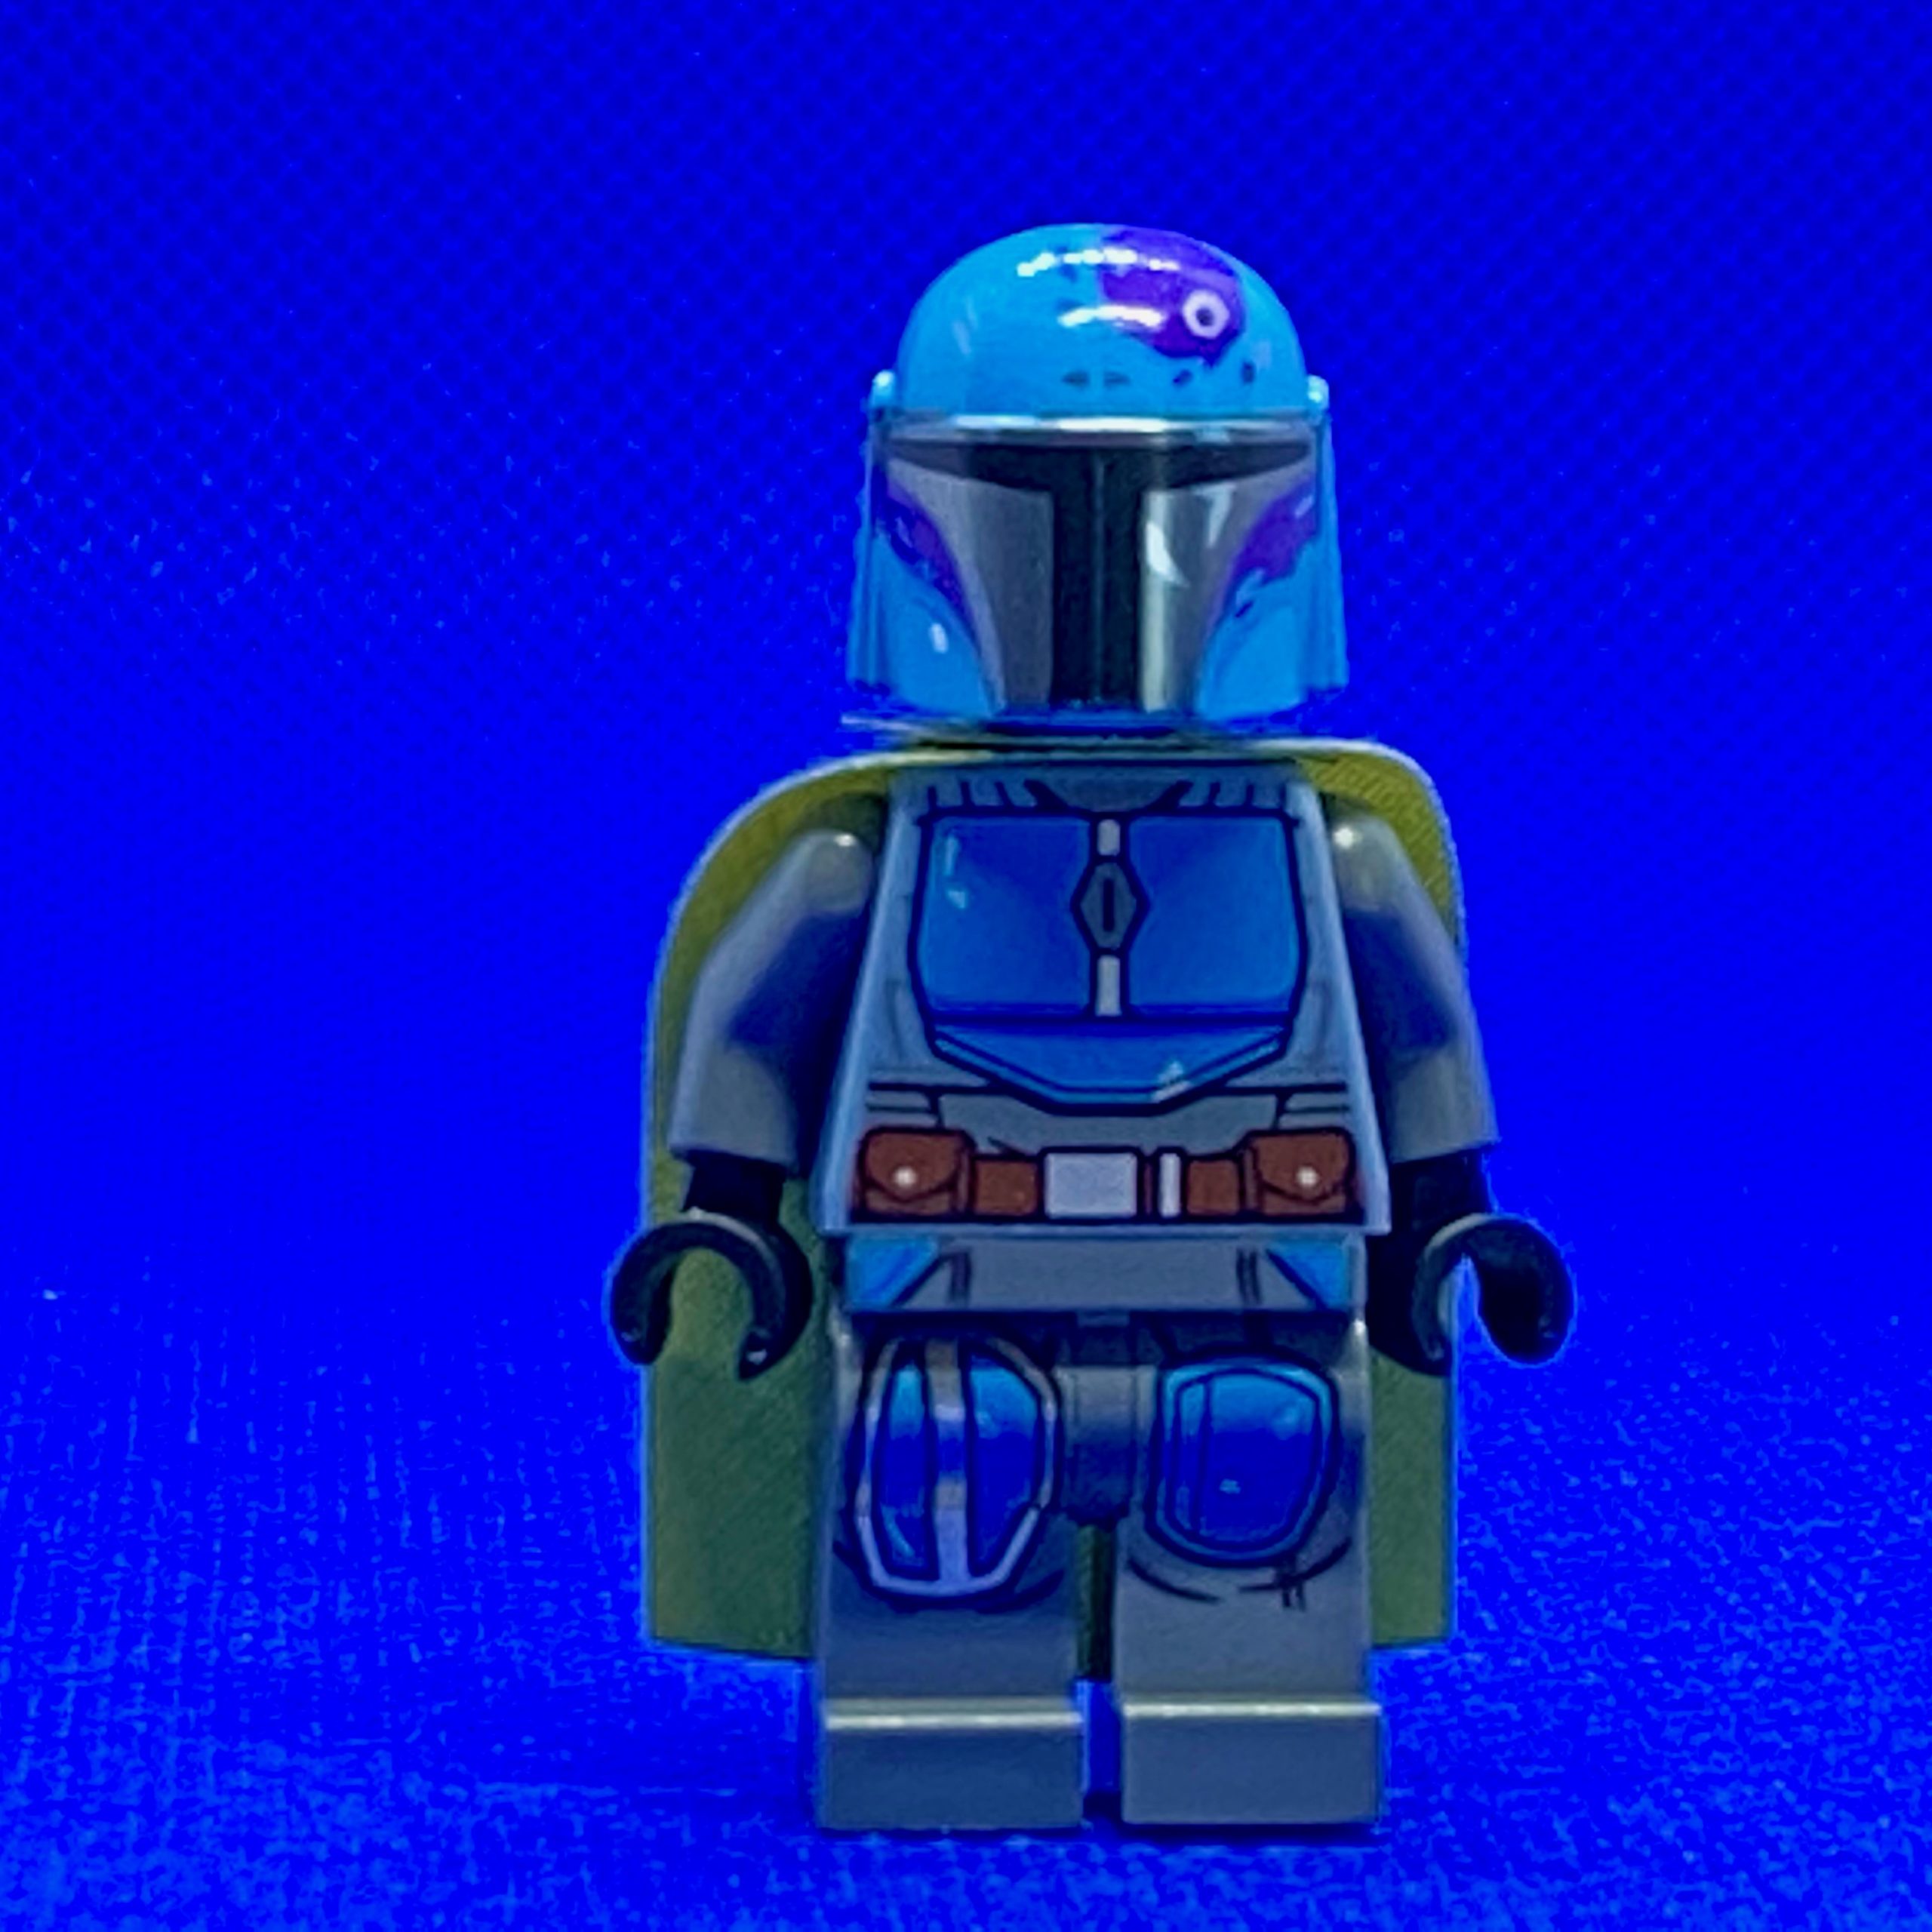 LEGO Star Wars Mandalorian Tribe Warrior Green Helmet Minifigure from 75267 